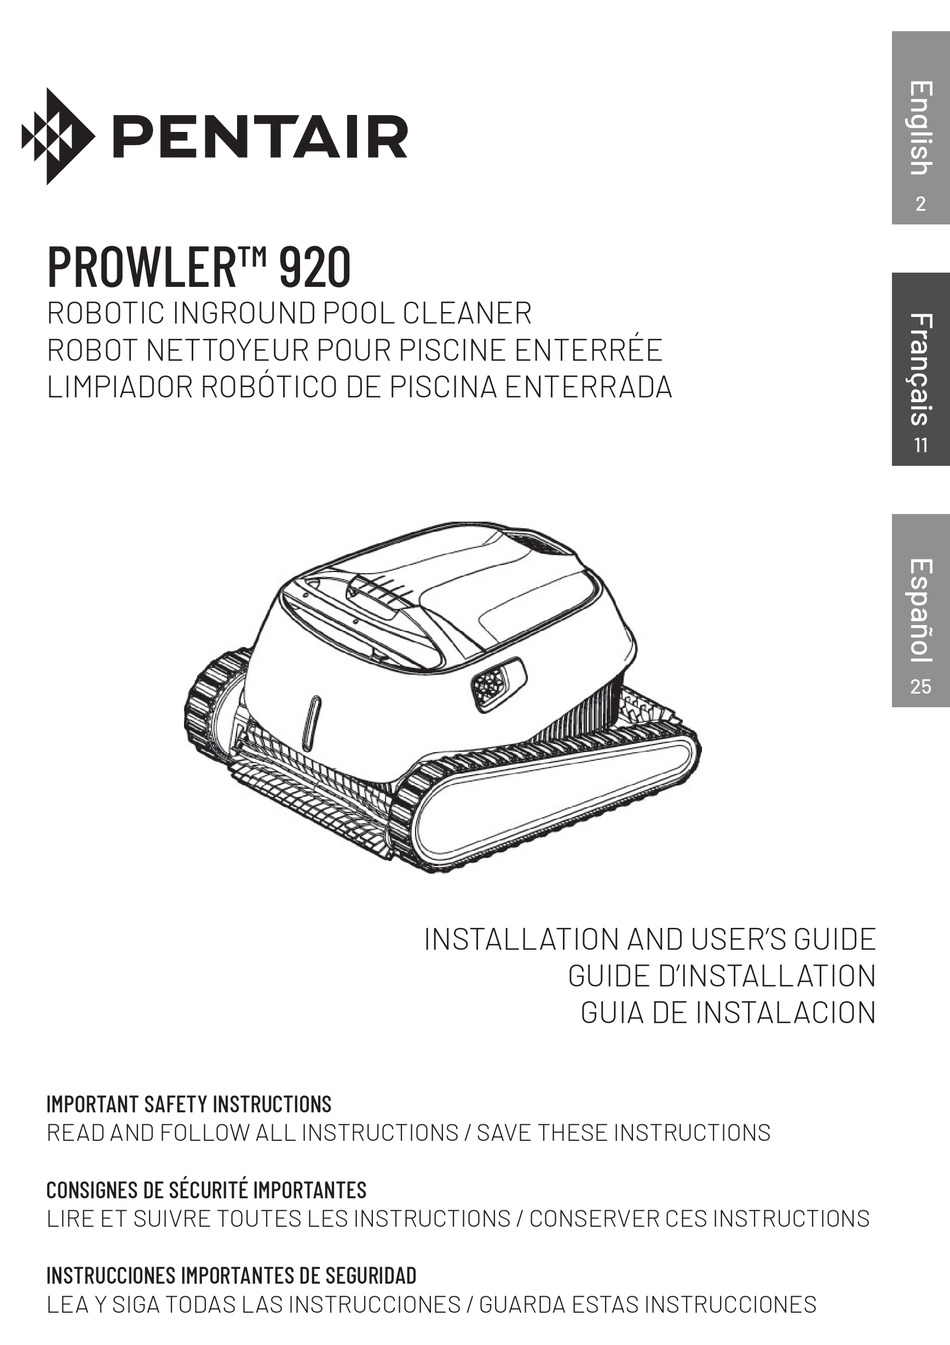 PENTAIR PROWLER 920 INSTALLATION AND USER MANUAL Pdf Download | ManualsLib